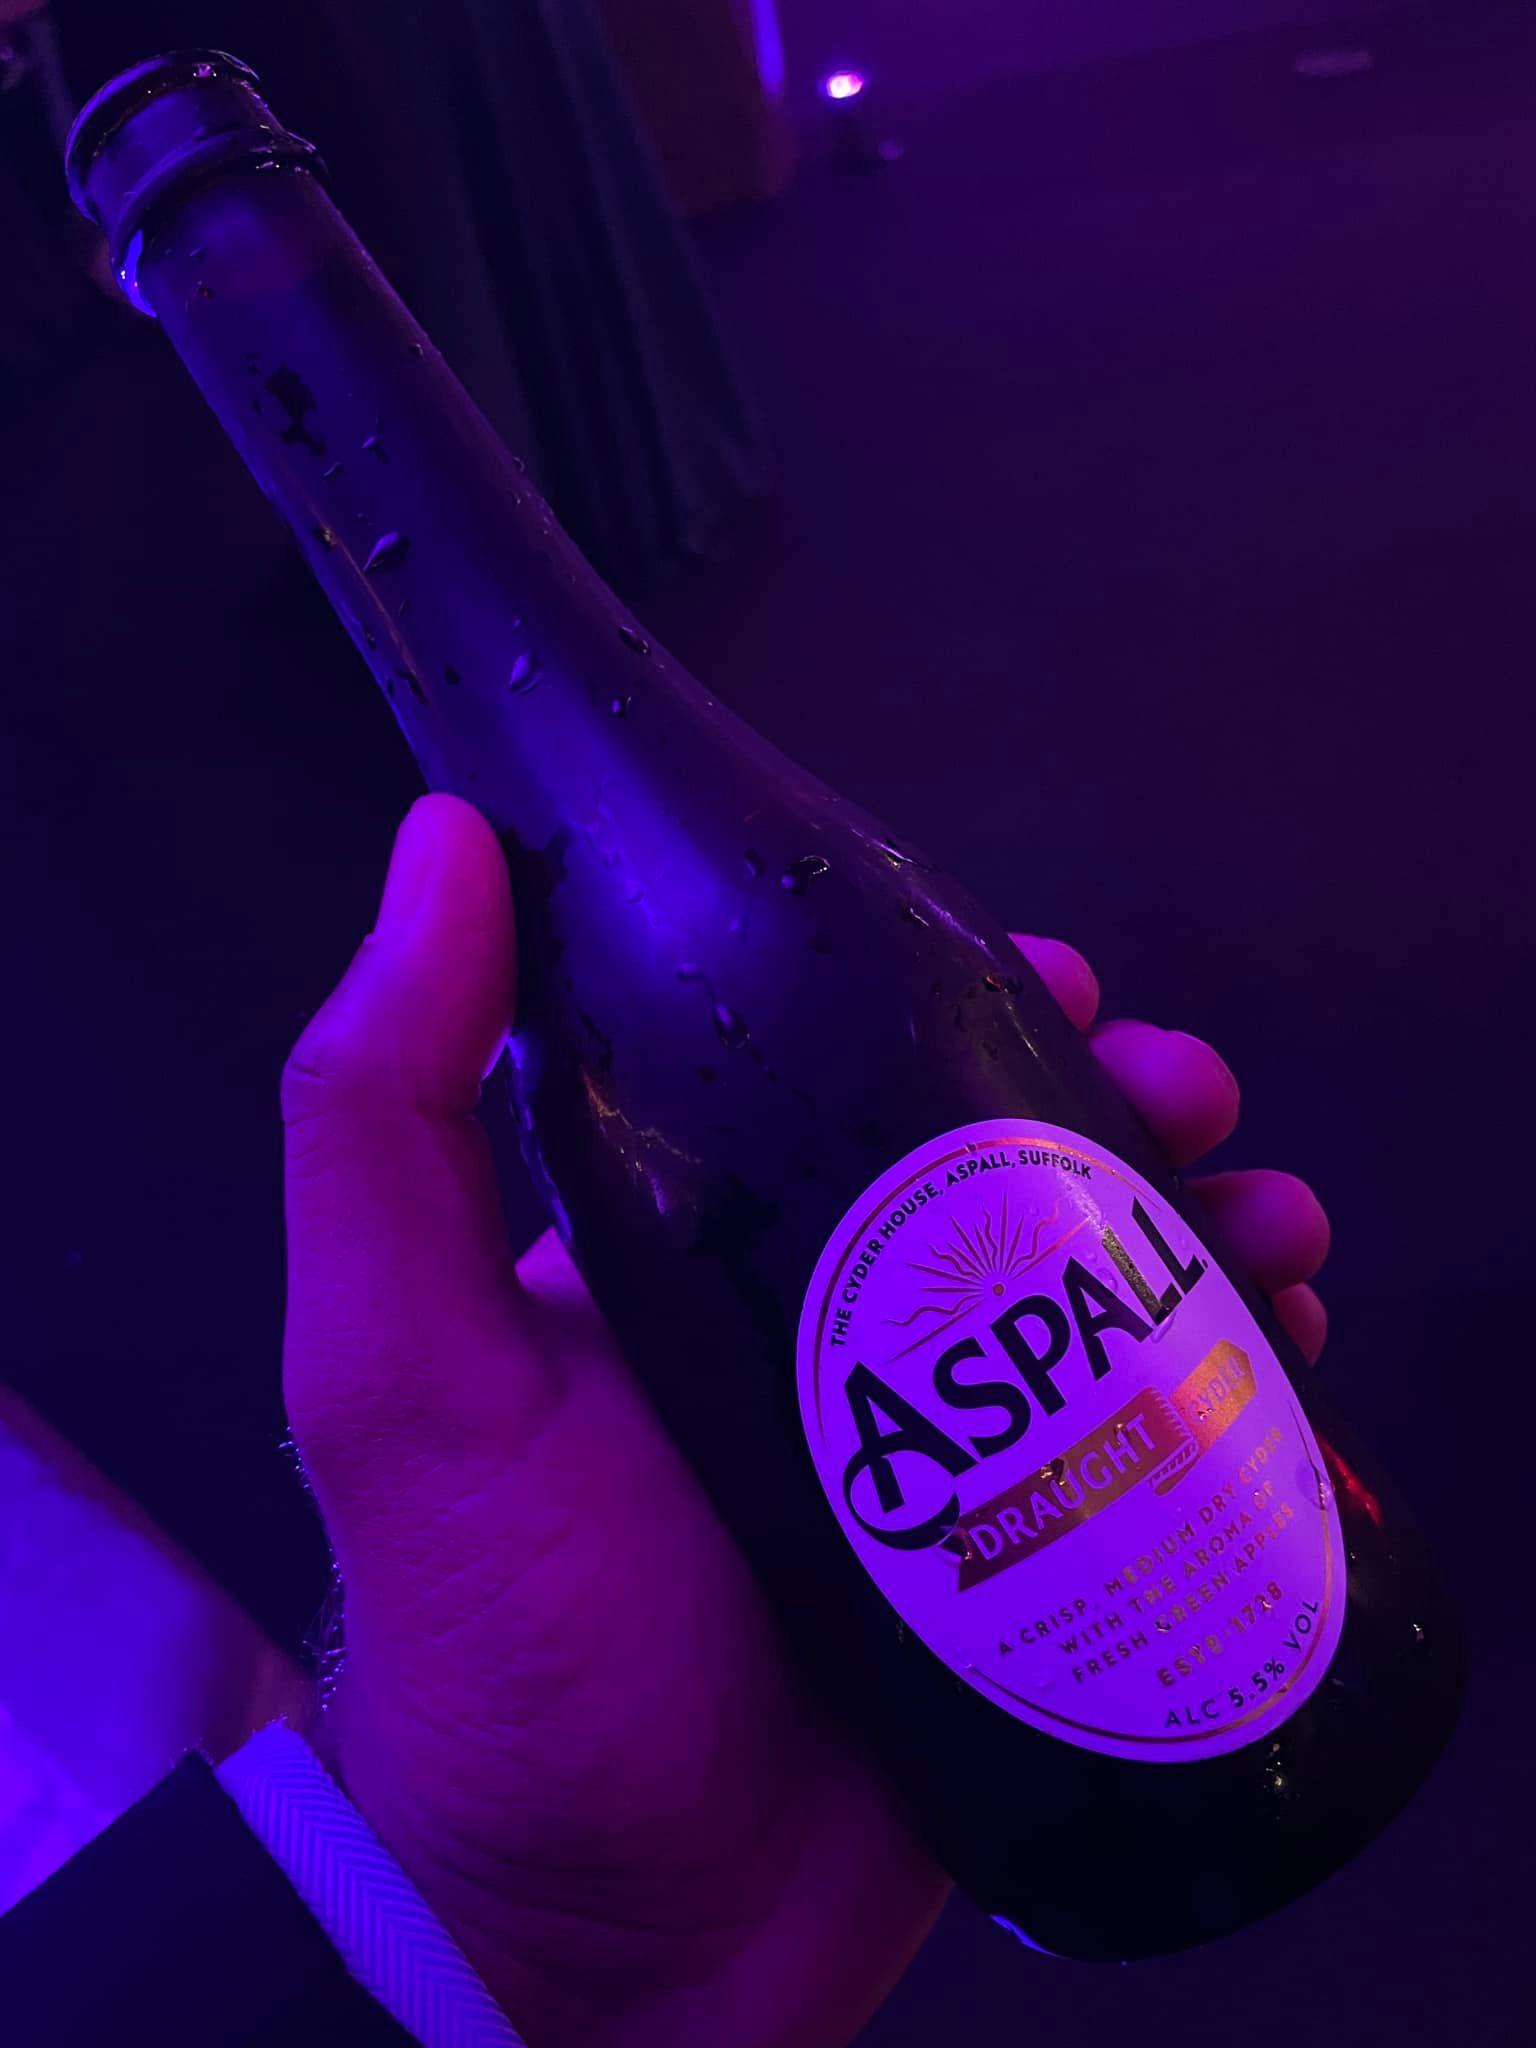 Aspall Draight Cider
